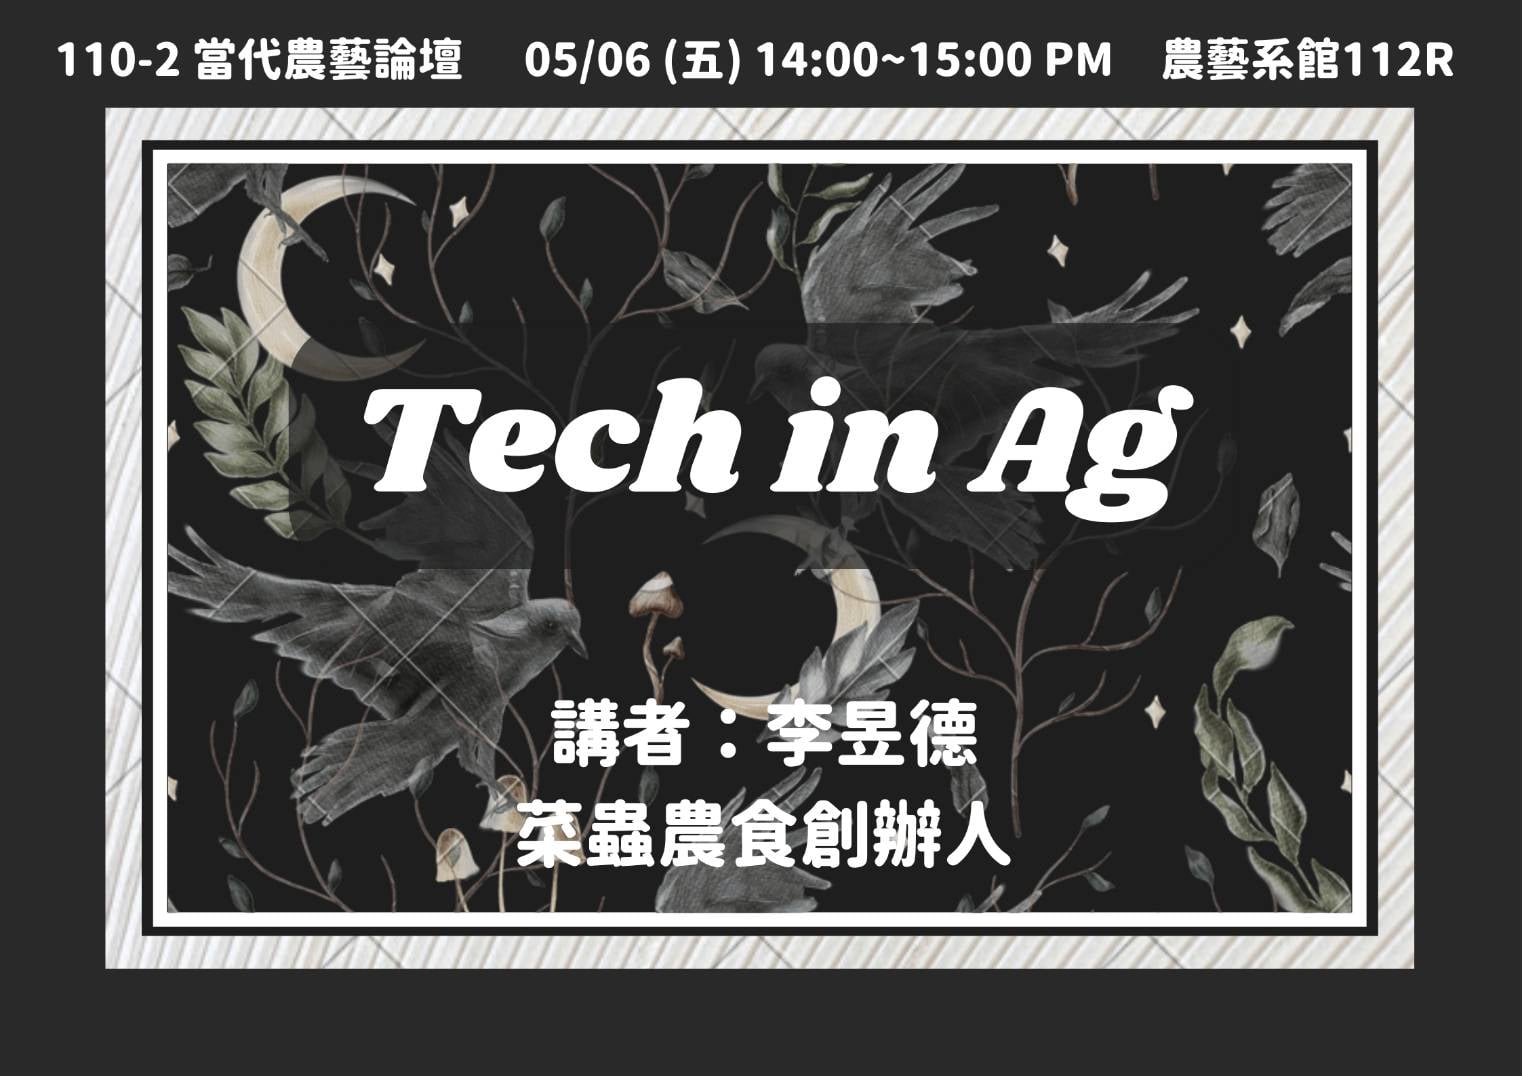 Tech in Ag／菜蟲農食創辦人 李昱德先生